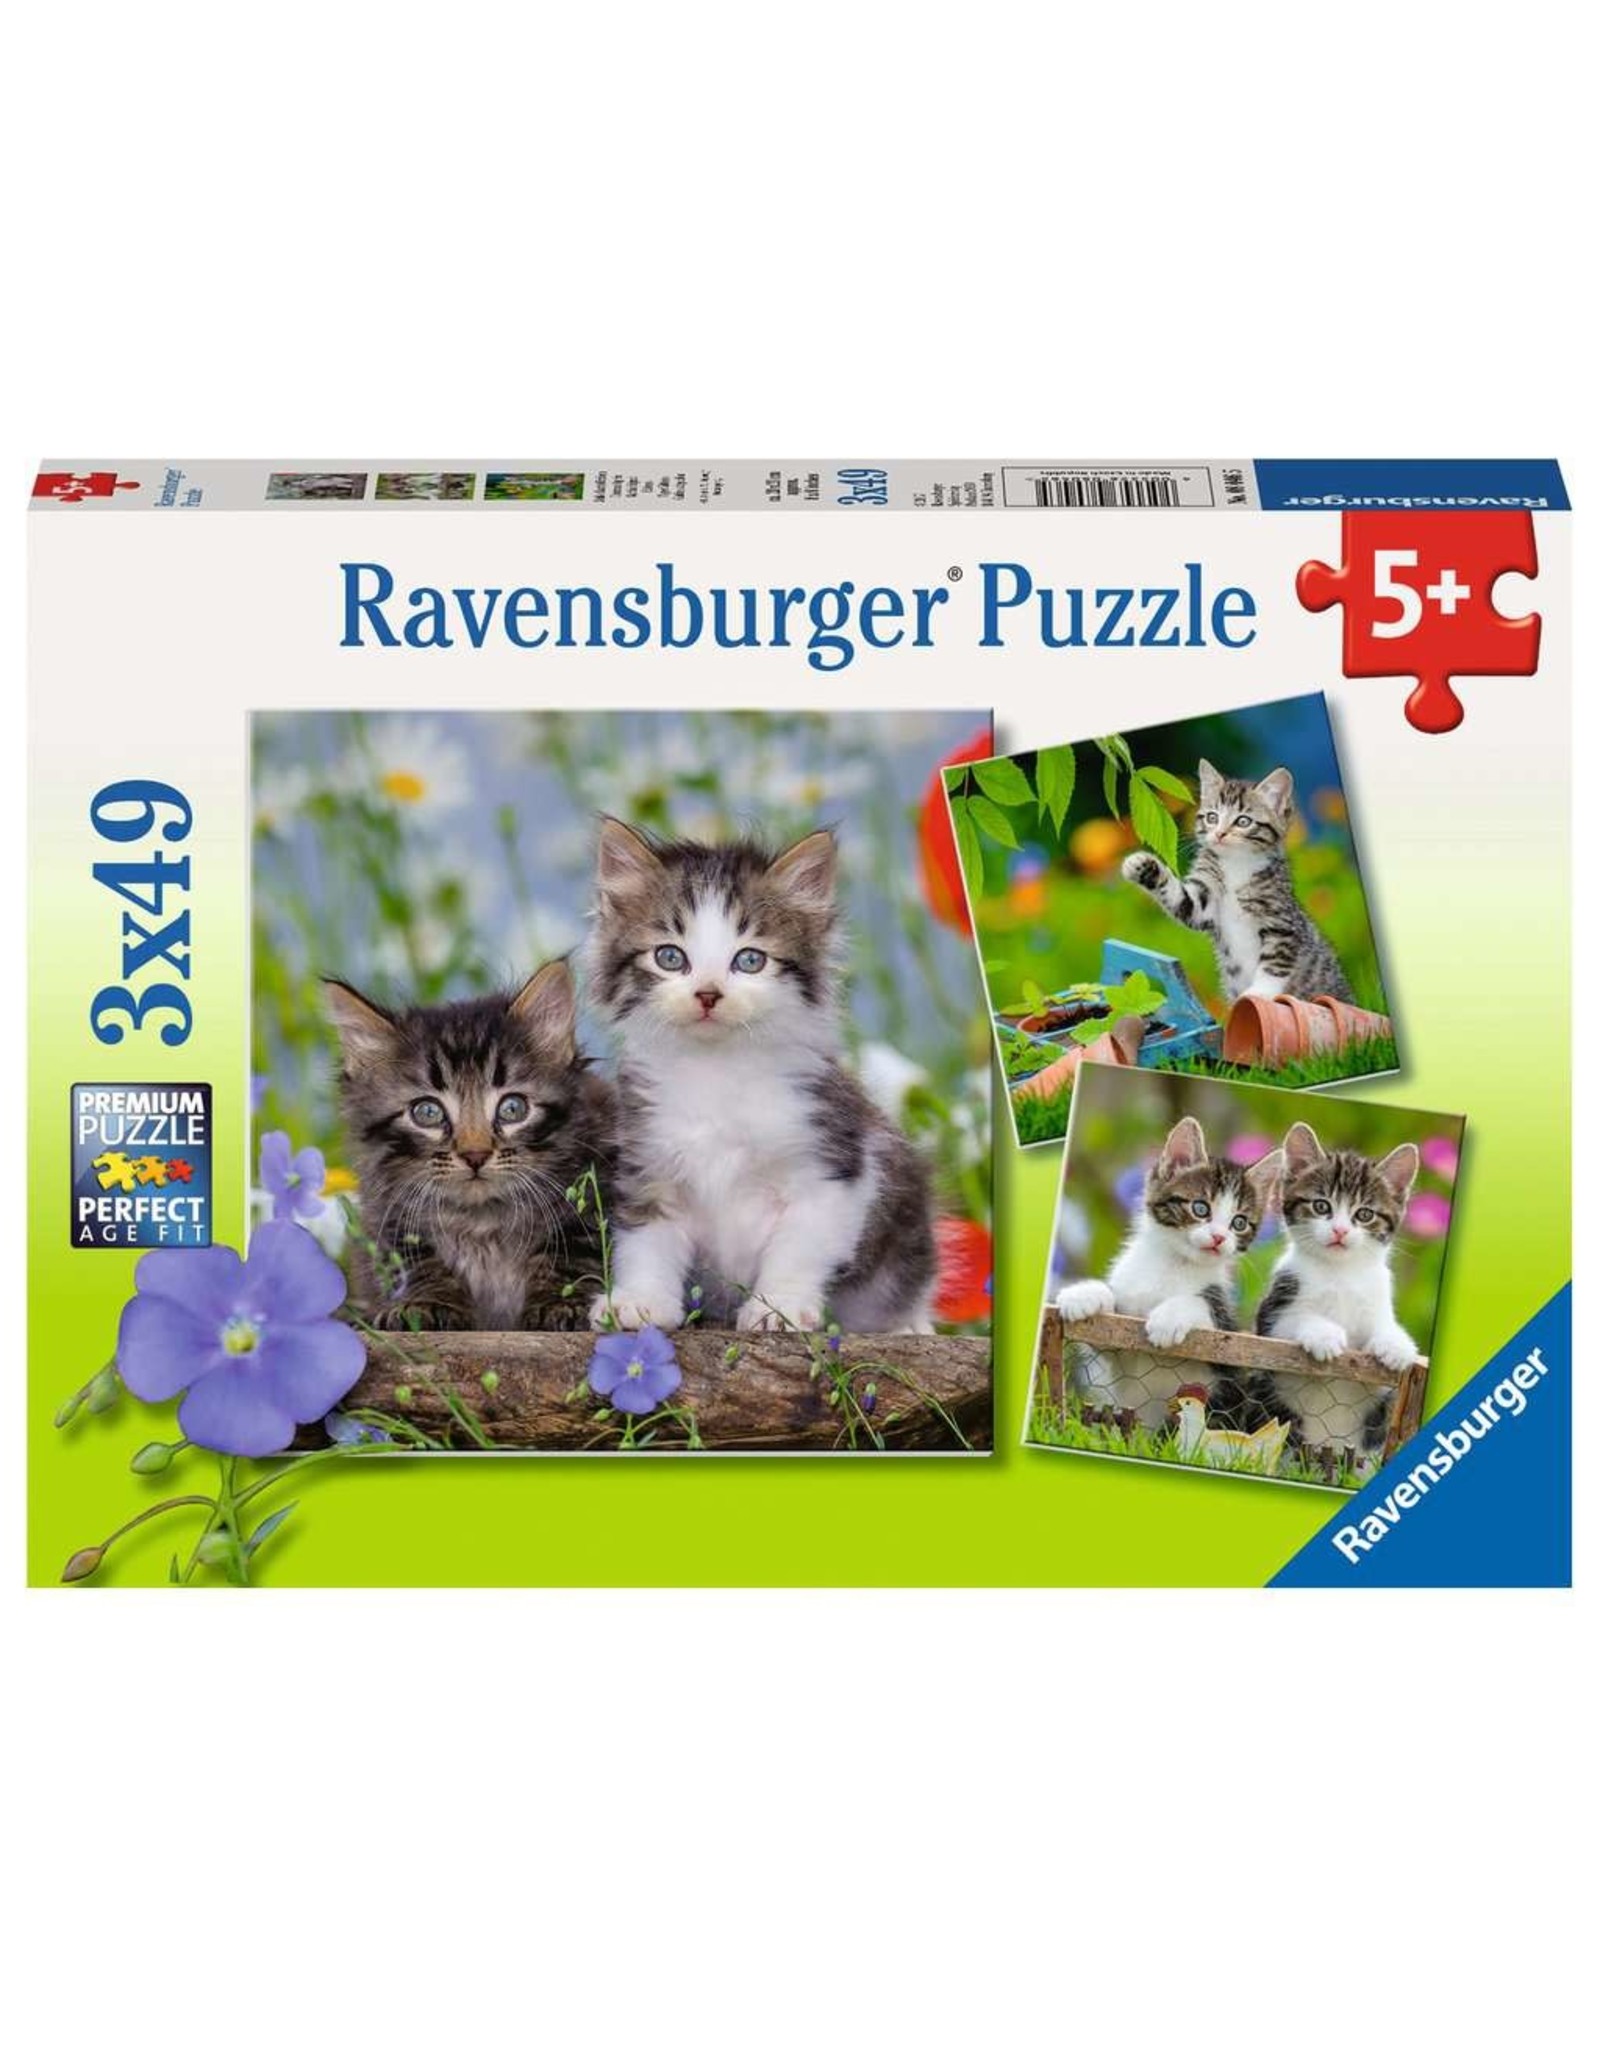 Ravensburger Cuddly Kittens 3x49 pc